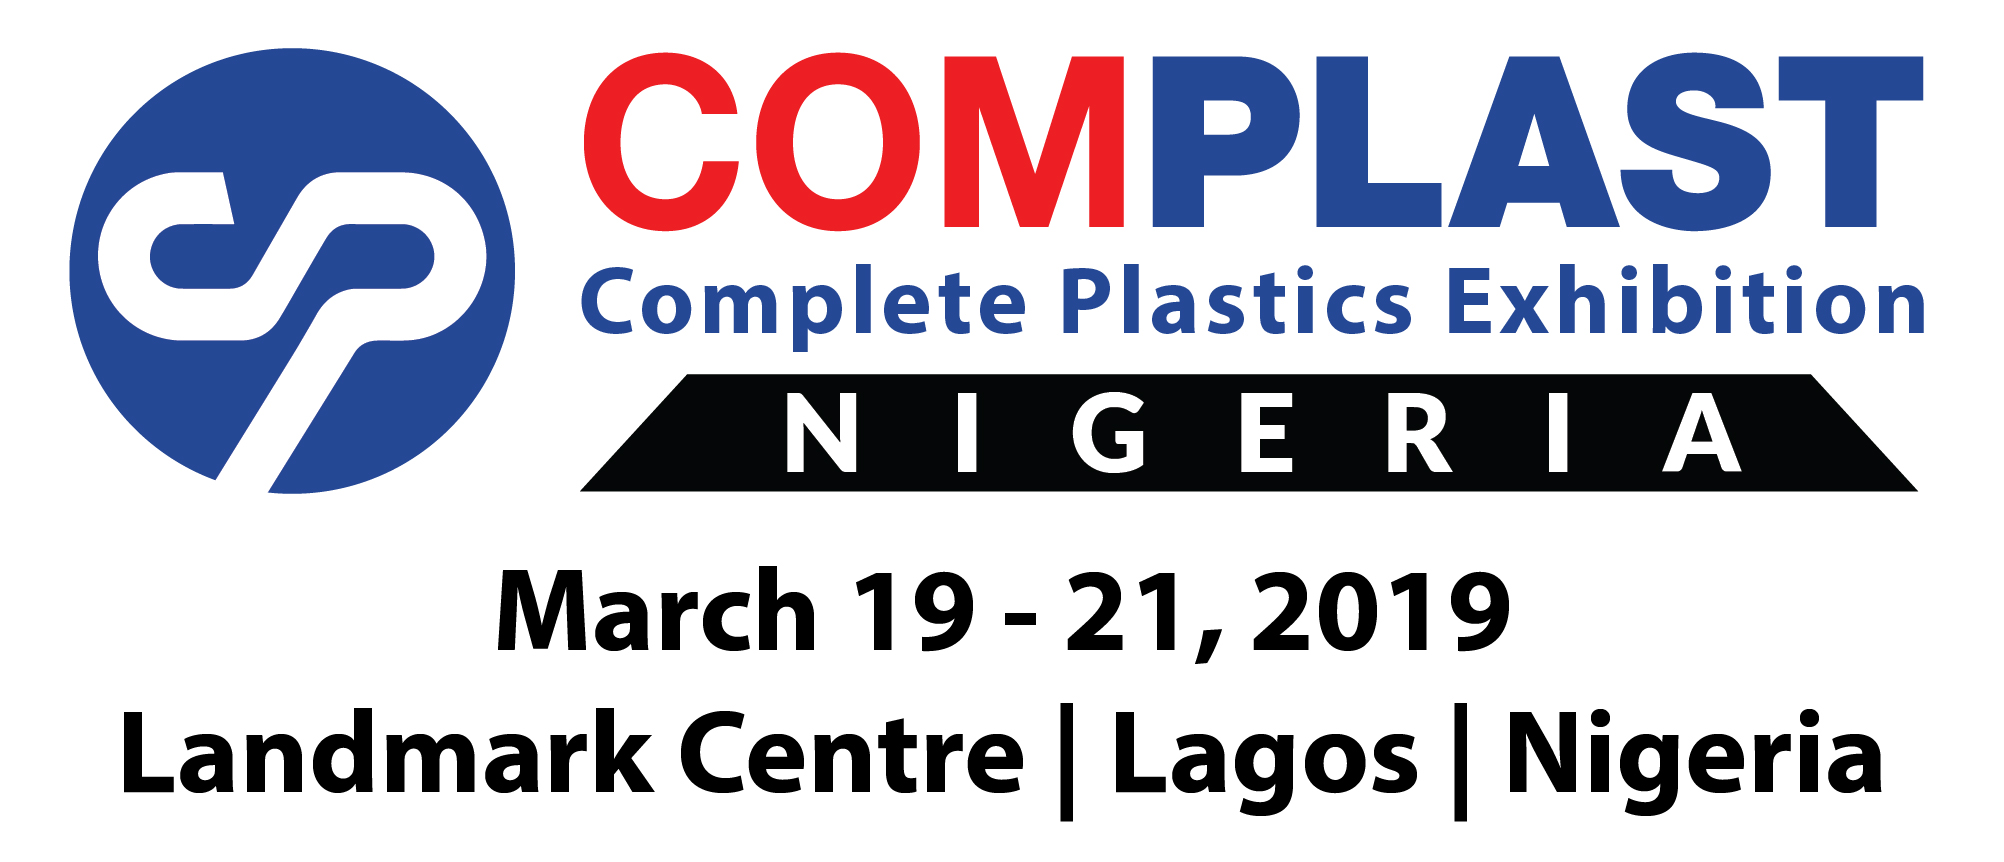 Complast_Nigeria Logo